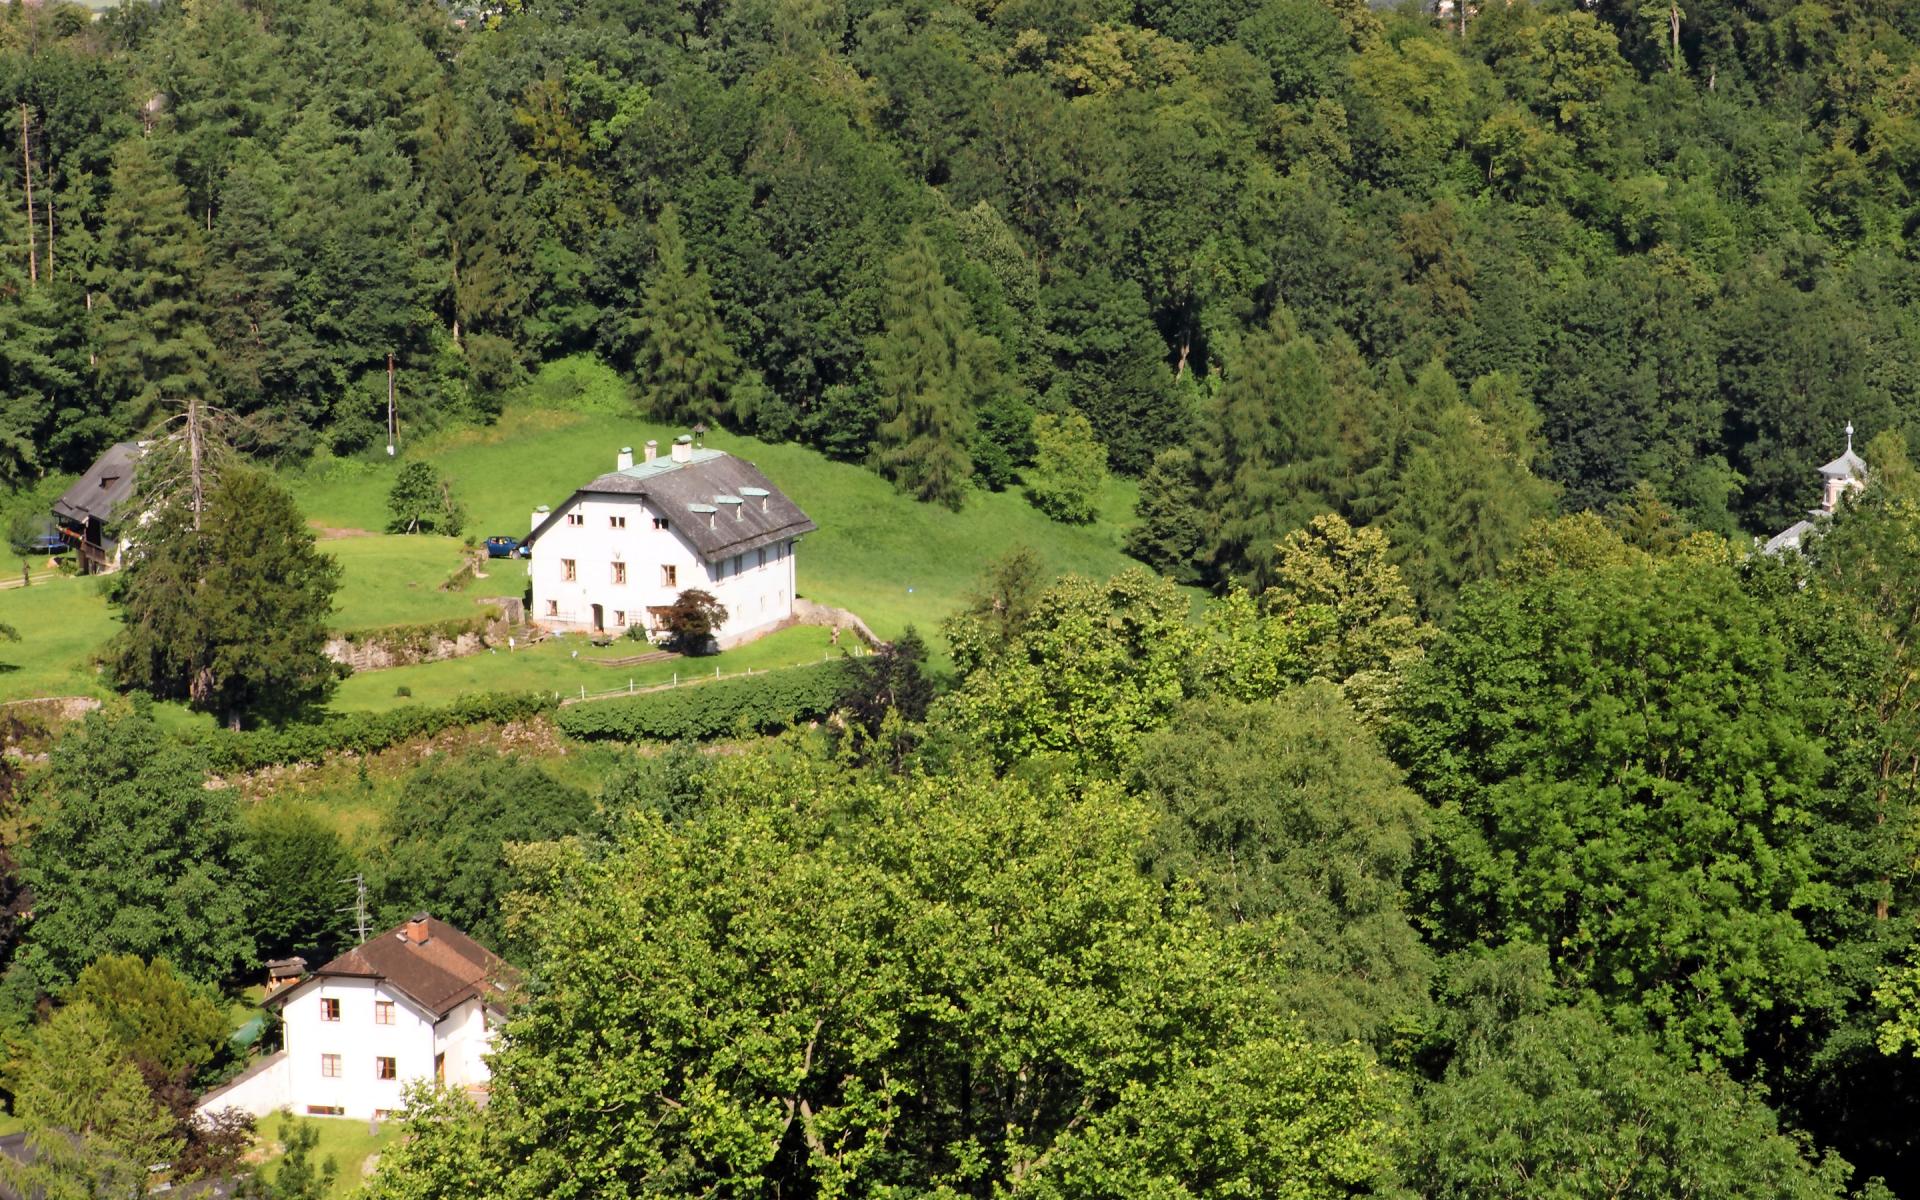 Austrian Countryside